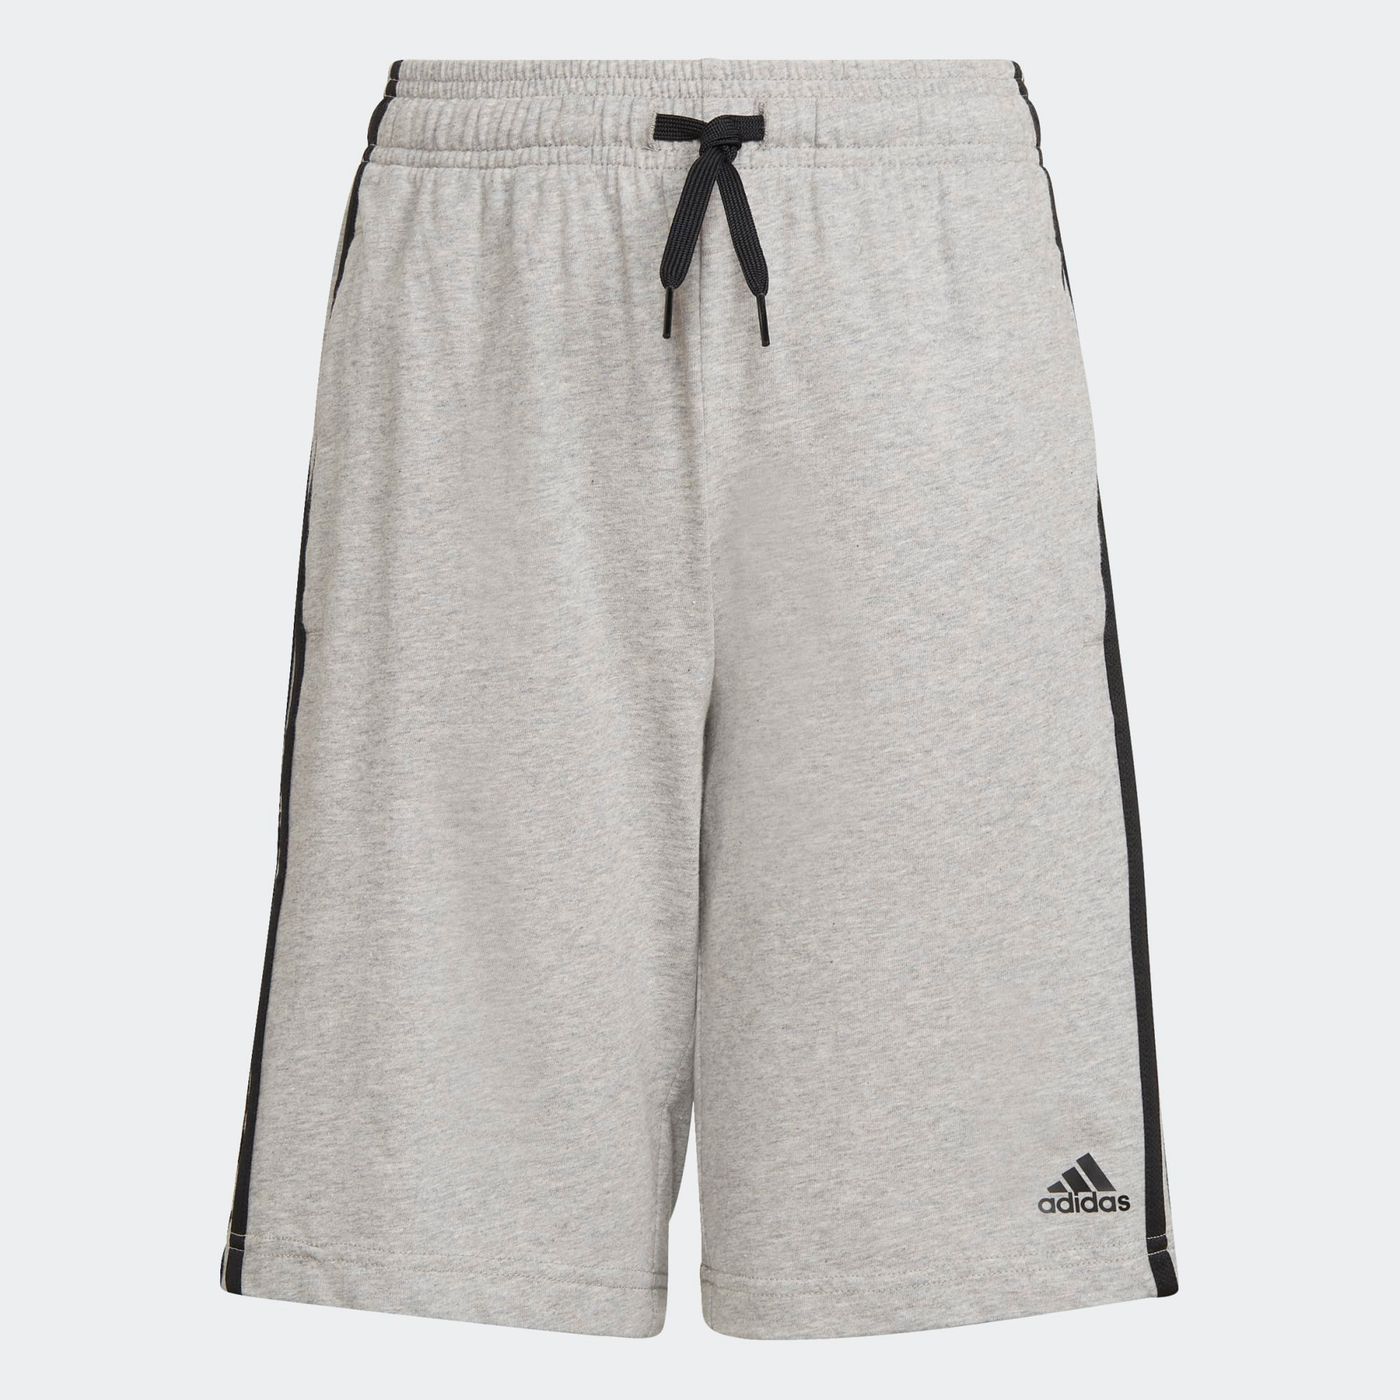 HE9310 - Shorts - Adidas